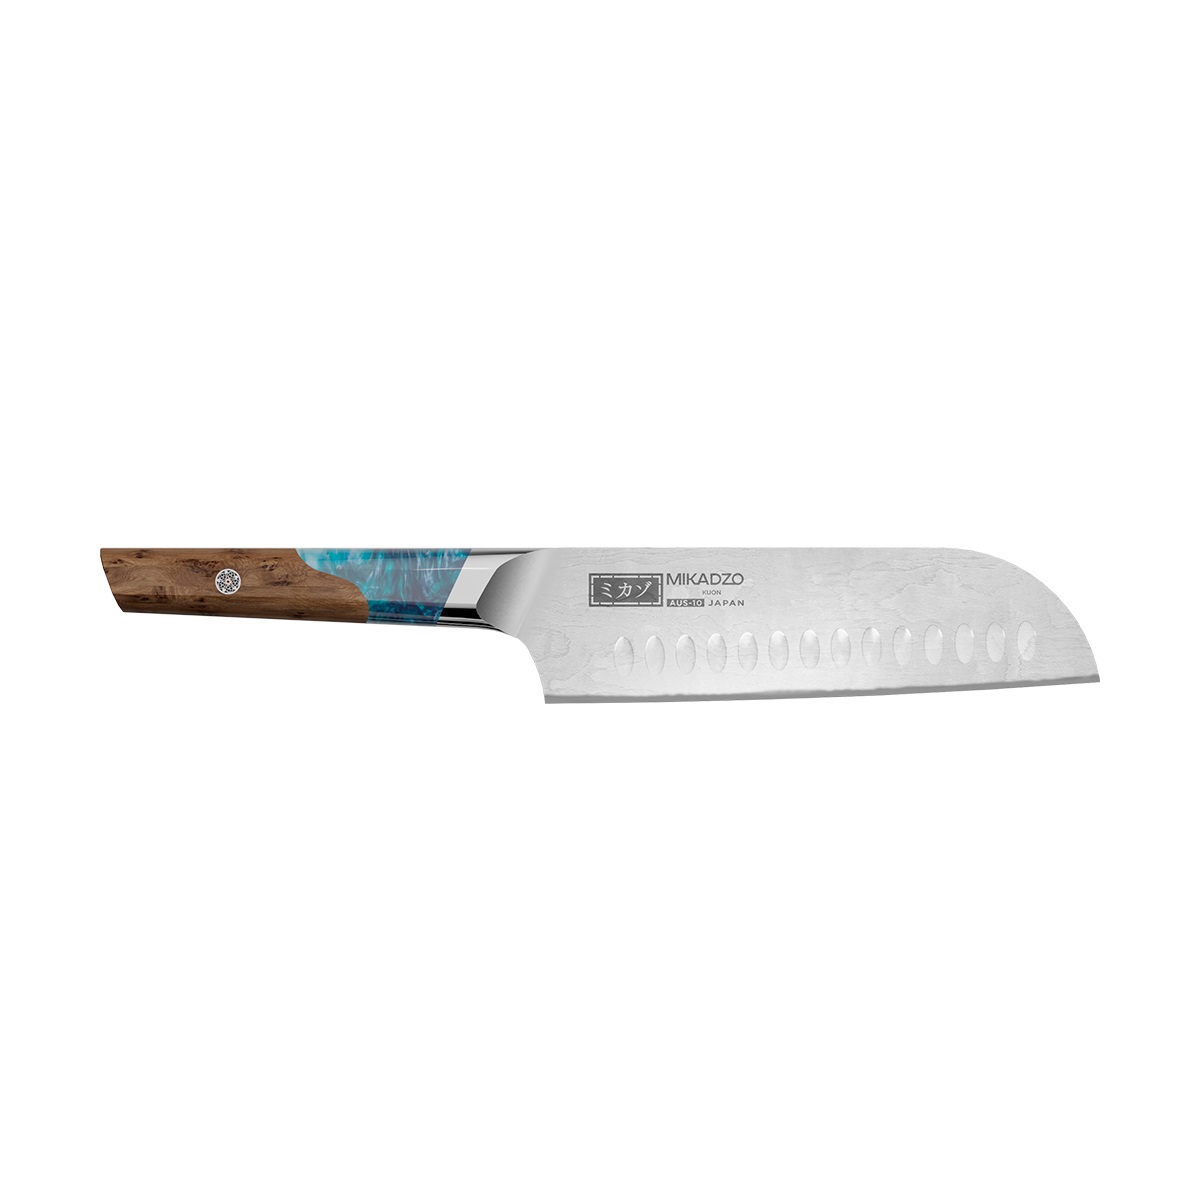 Кухонный нож Omoikiri Damascus Kuon 4992036 кухонный нож omoikiri micadzo imari bl 4992021